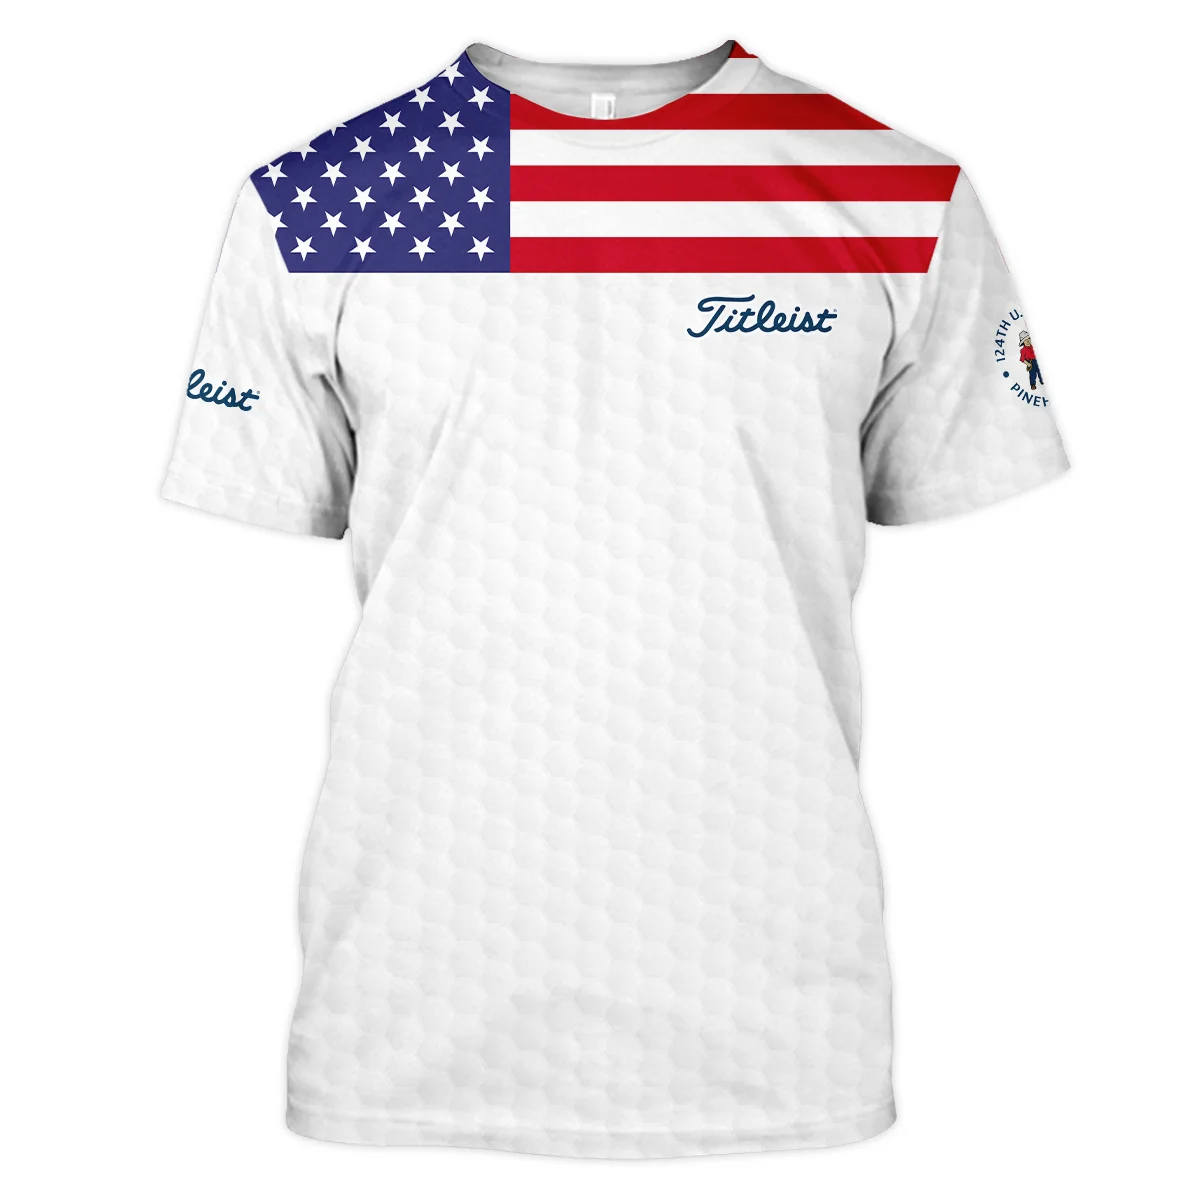 Titleist 124th U.S. Open Pinehurst Sleeveless Jacket USA Flag Golf Pattern All Over Print Sleeveless Jacket